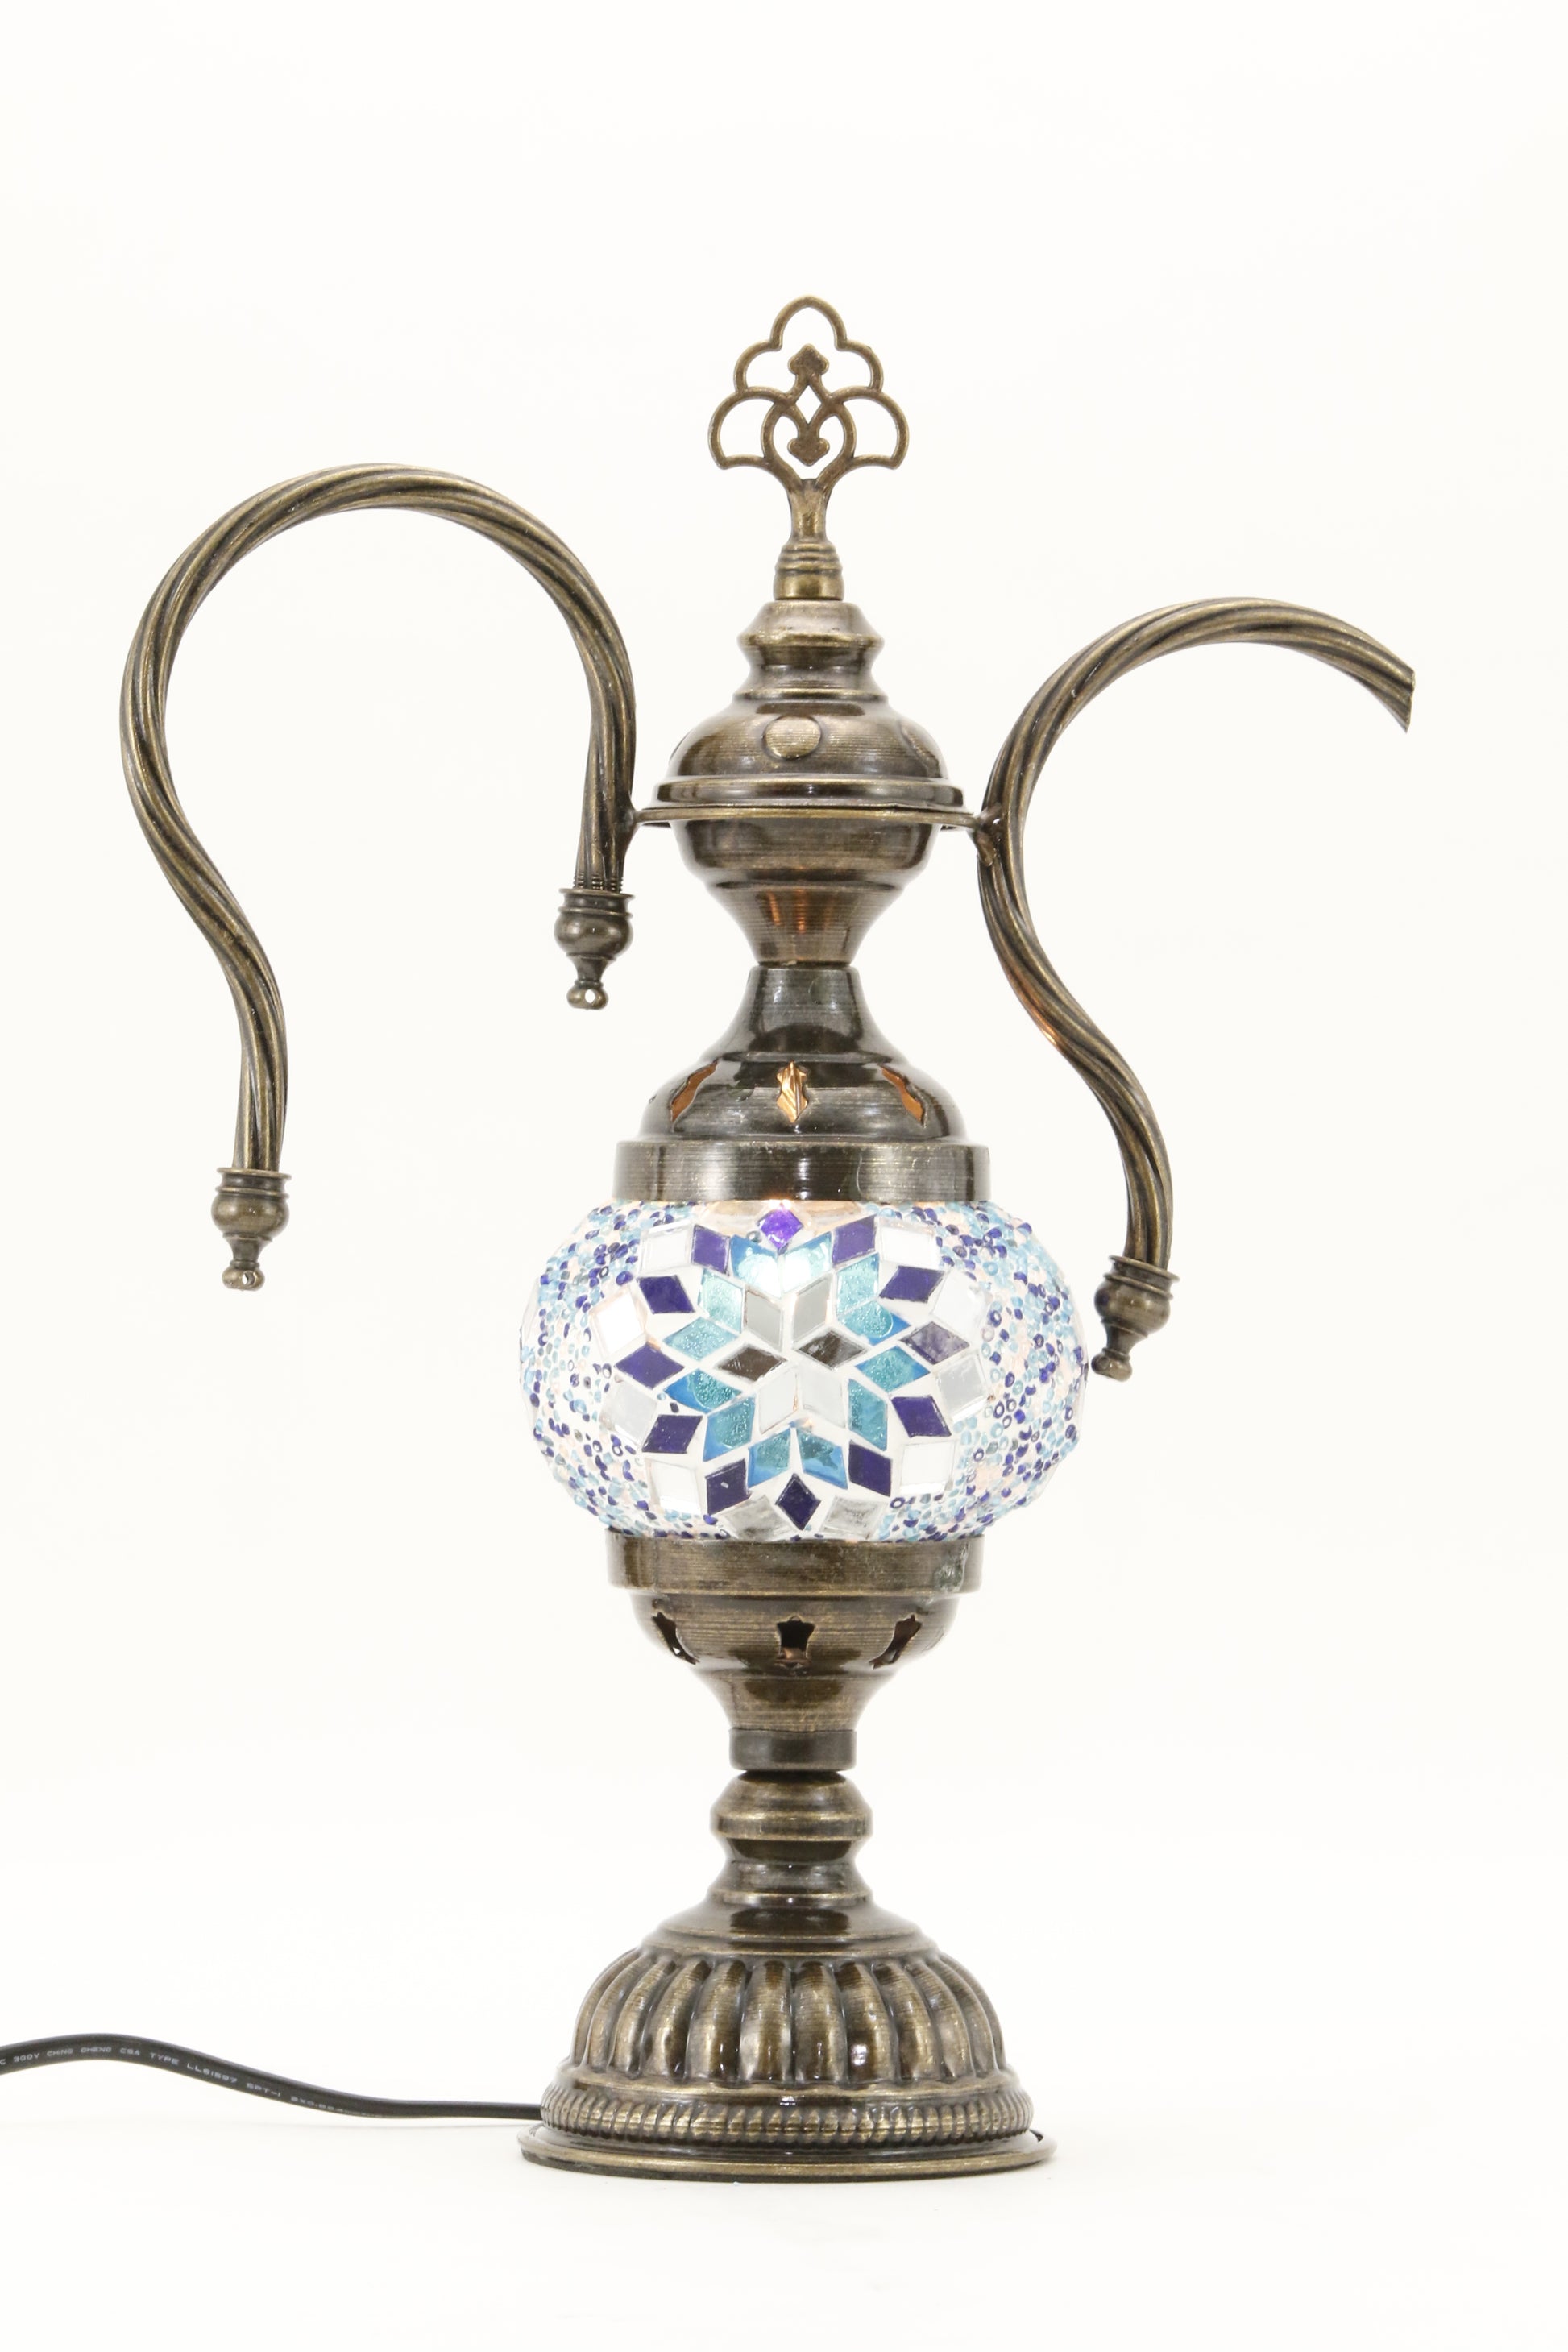 TURKISH MOSAIC GENIE BOTTLE TABLE LAMP 9 X 14